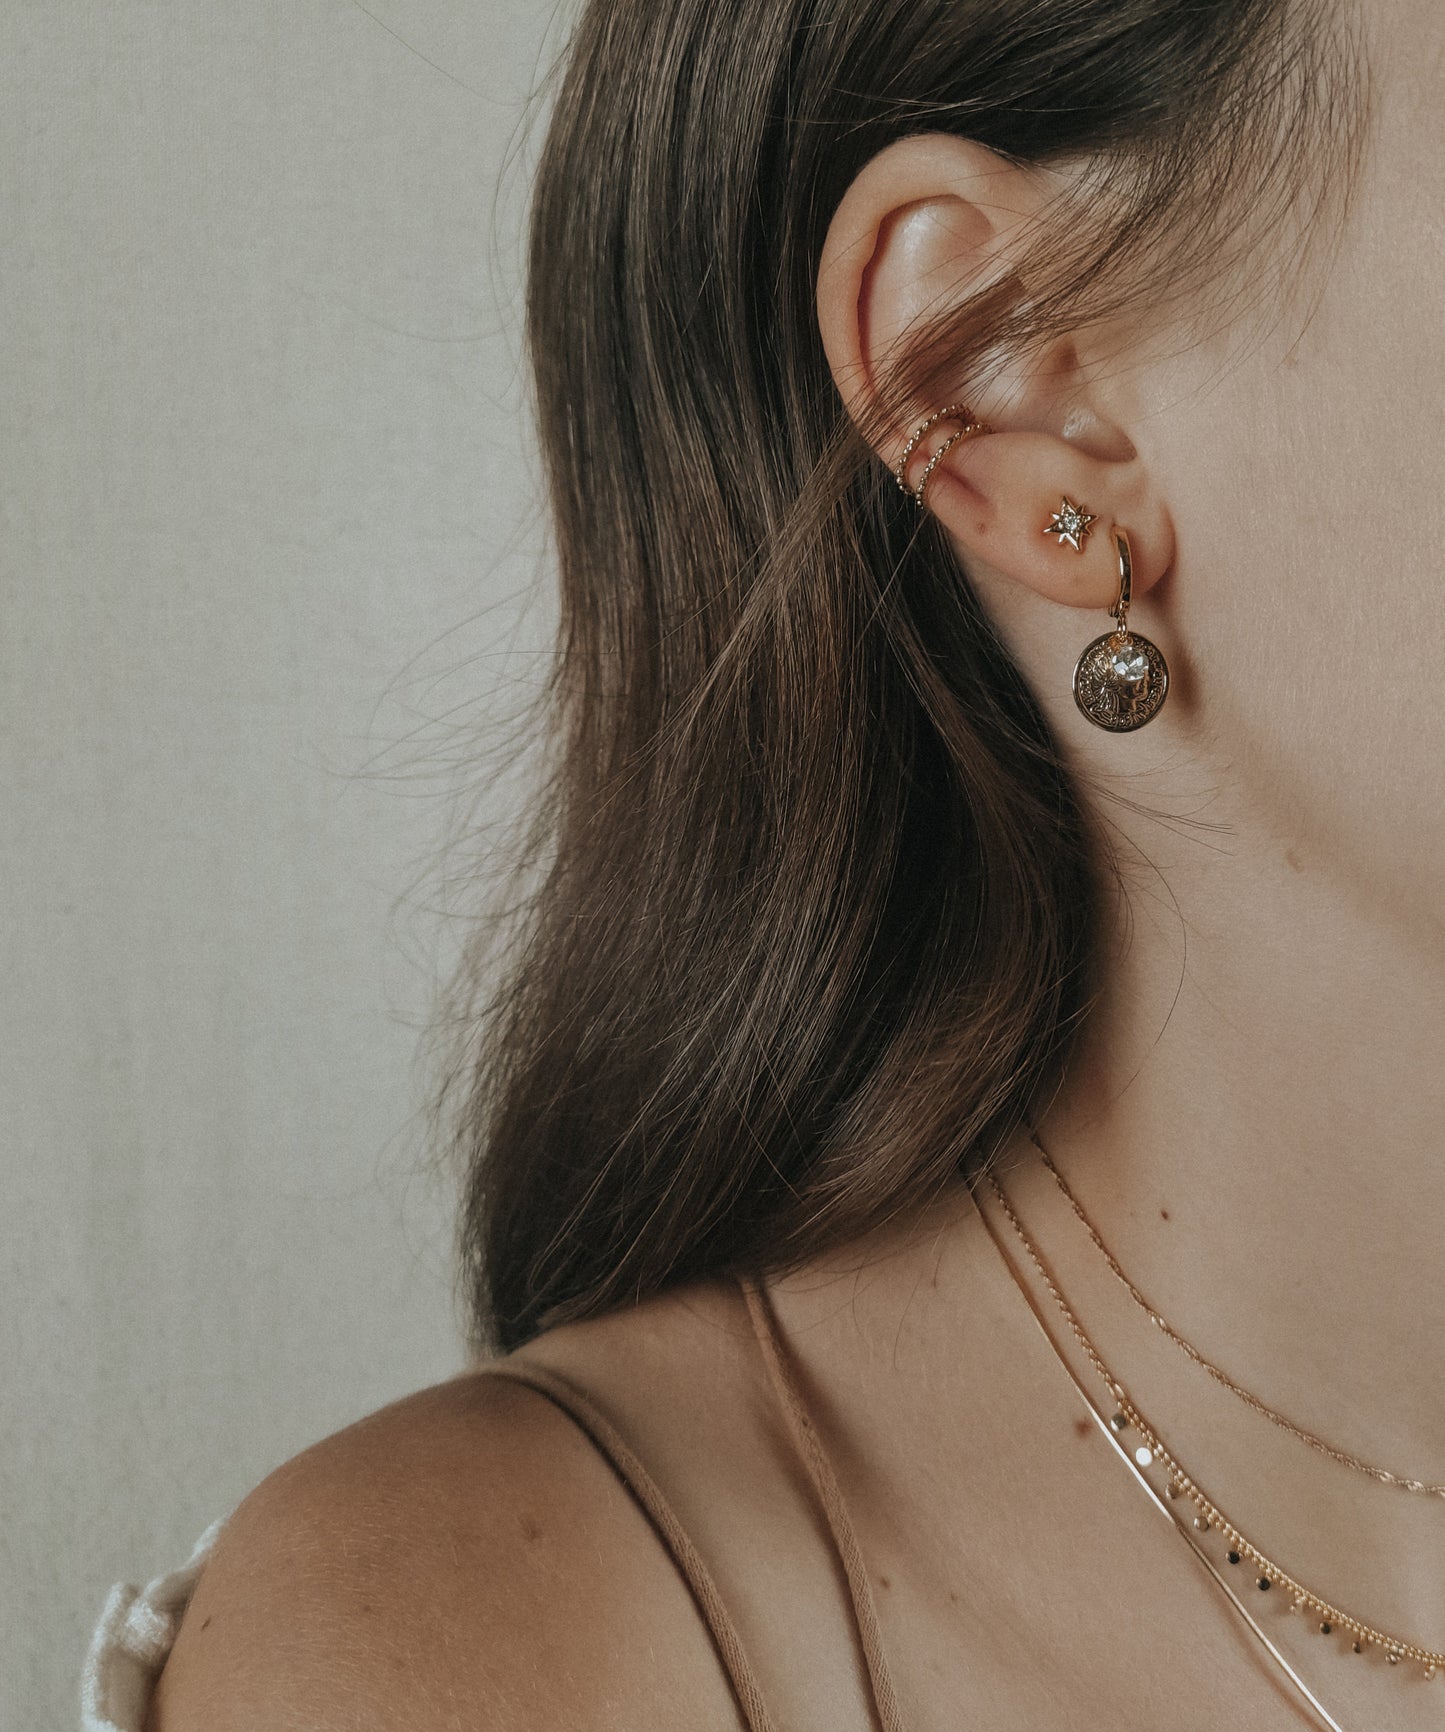 “Elyna” earrings